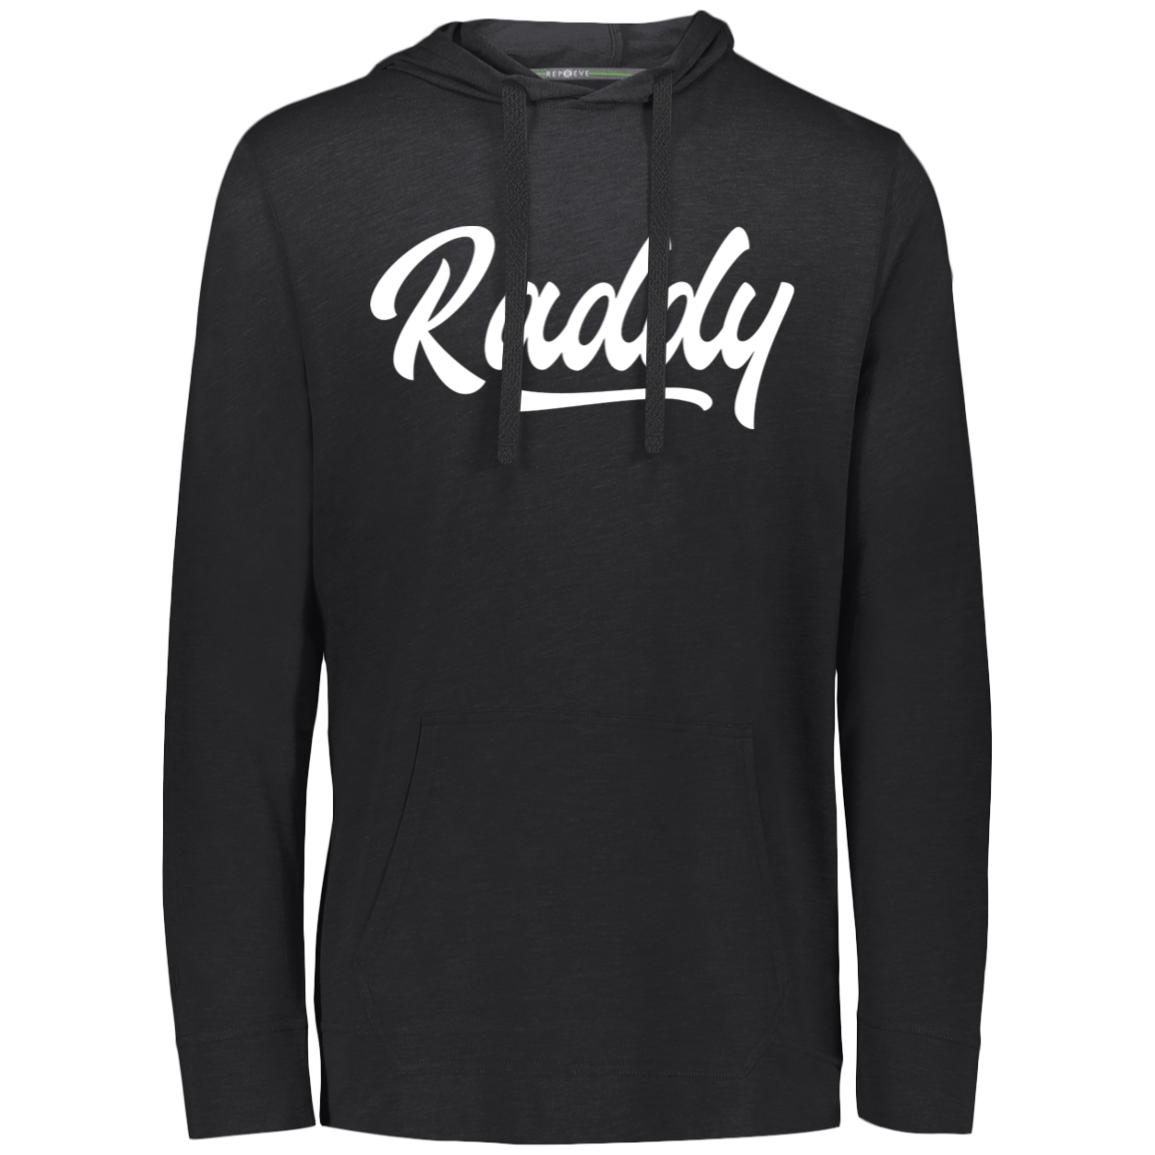 Raddy Men's Black Eco Triblend T-Shirt Hoodie